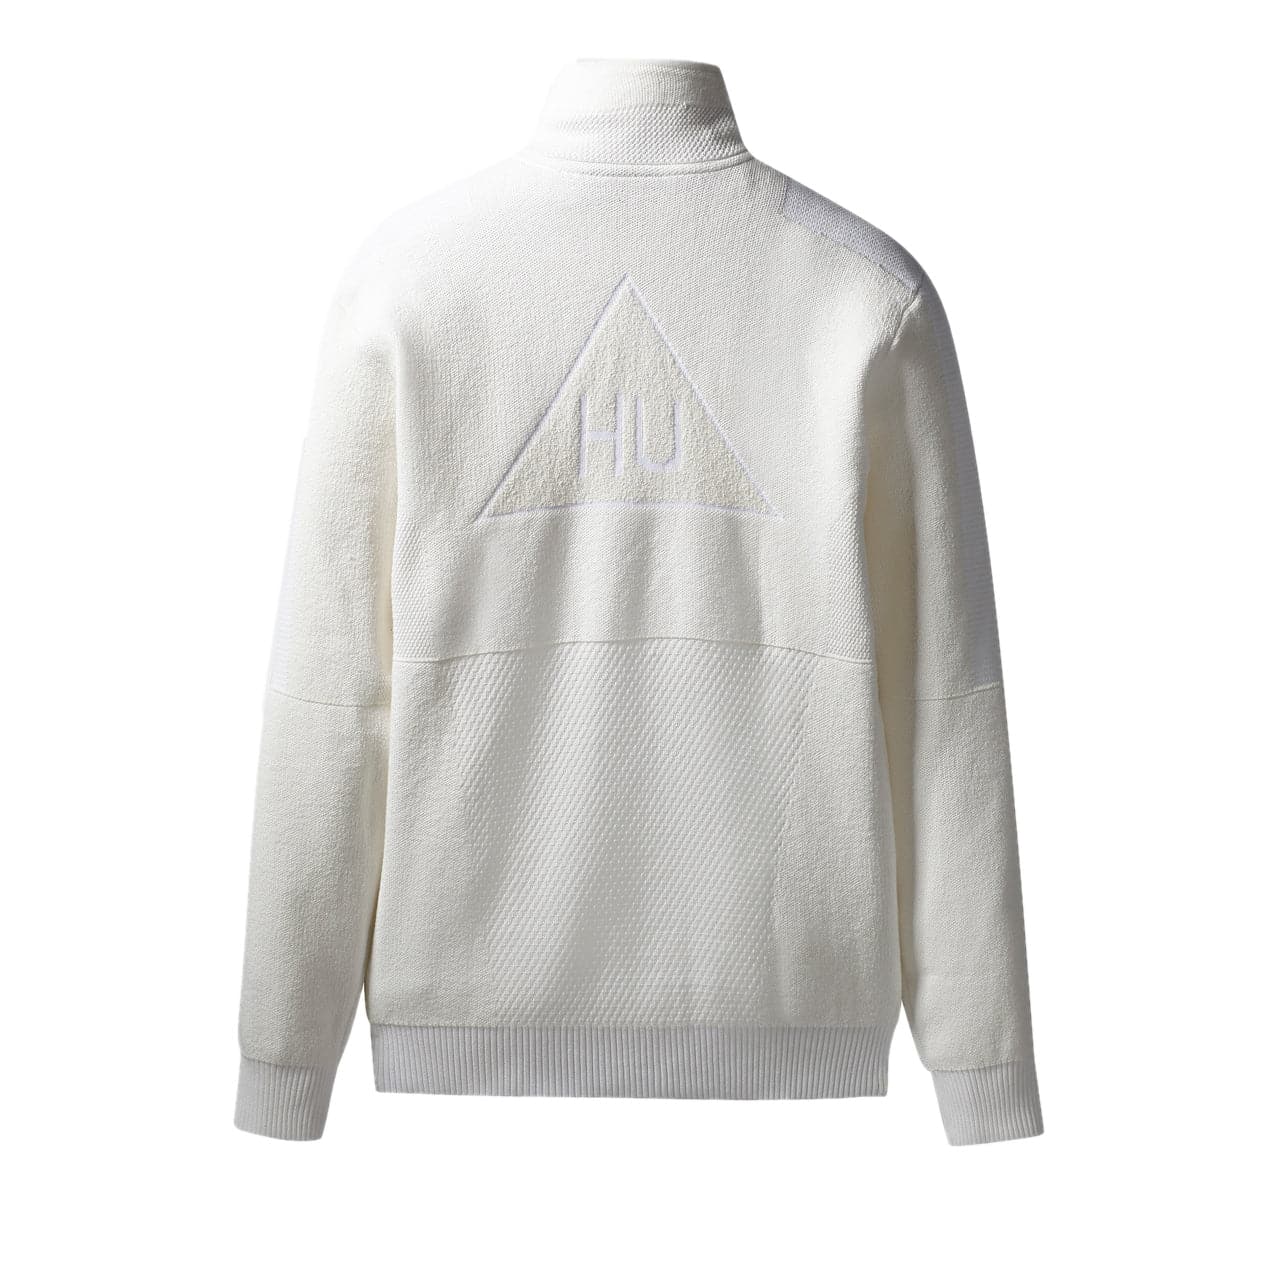 adidas x Pharrell Williams Holi Track Jacket 'Blank Canvas' (Creme)  - Allike Store